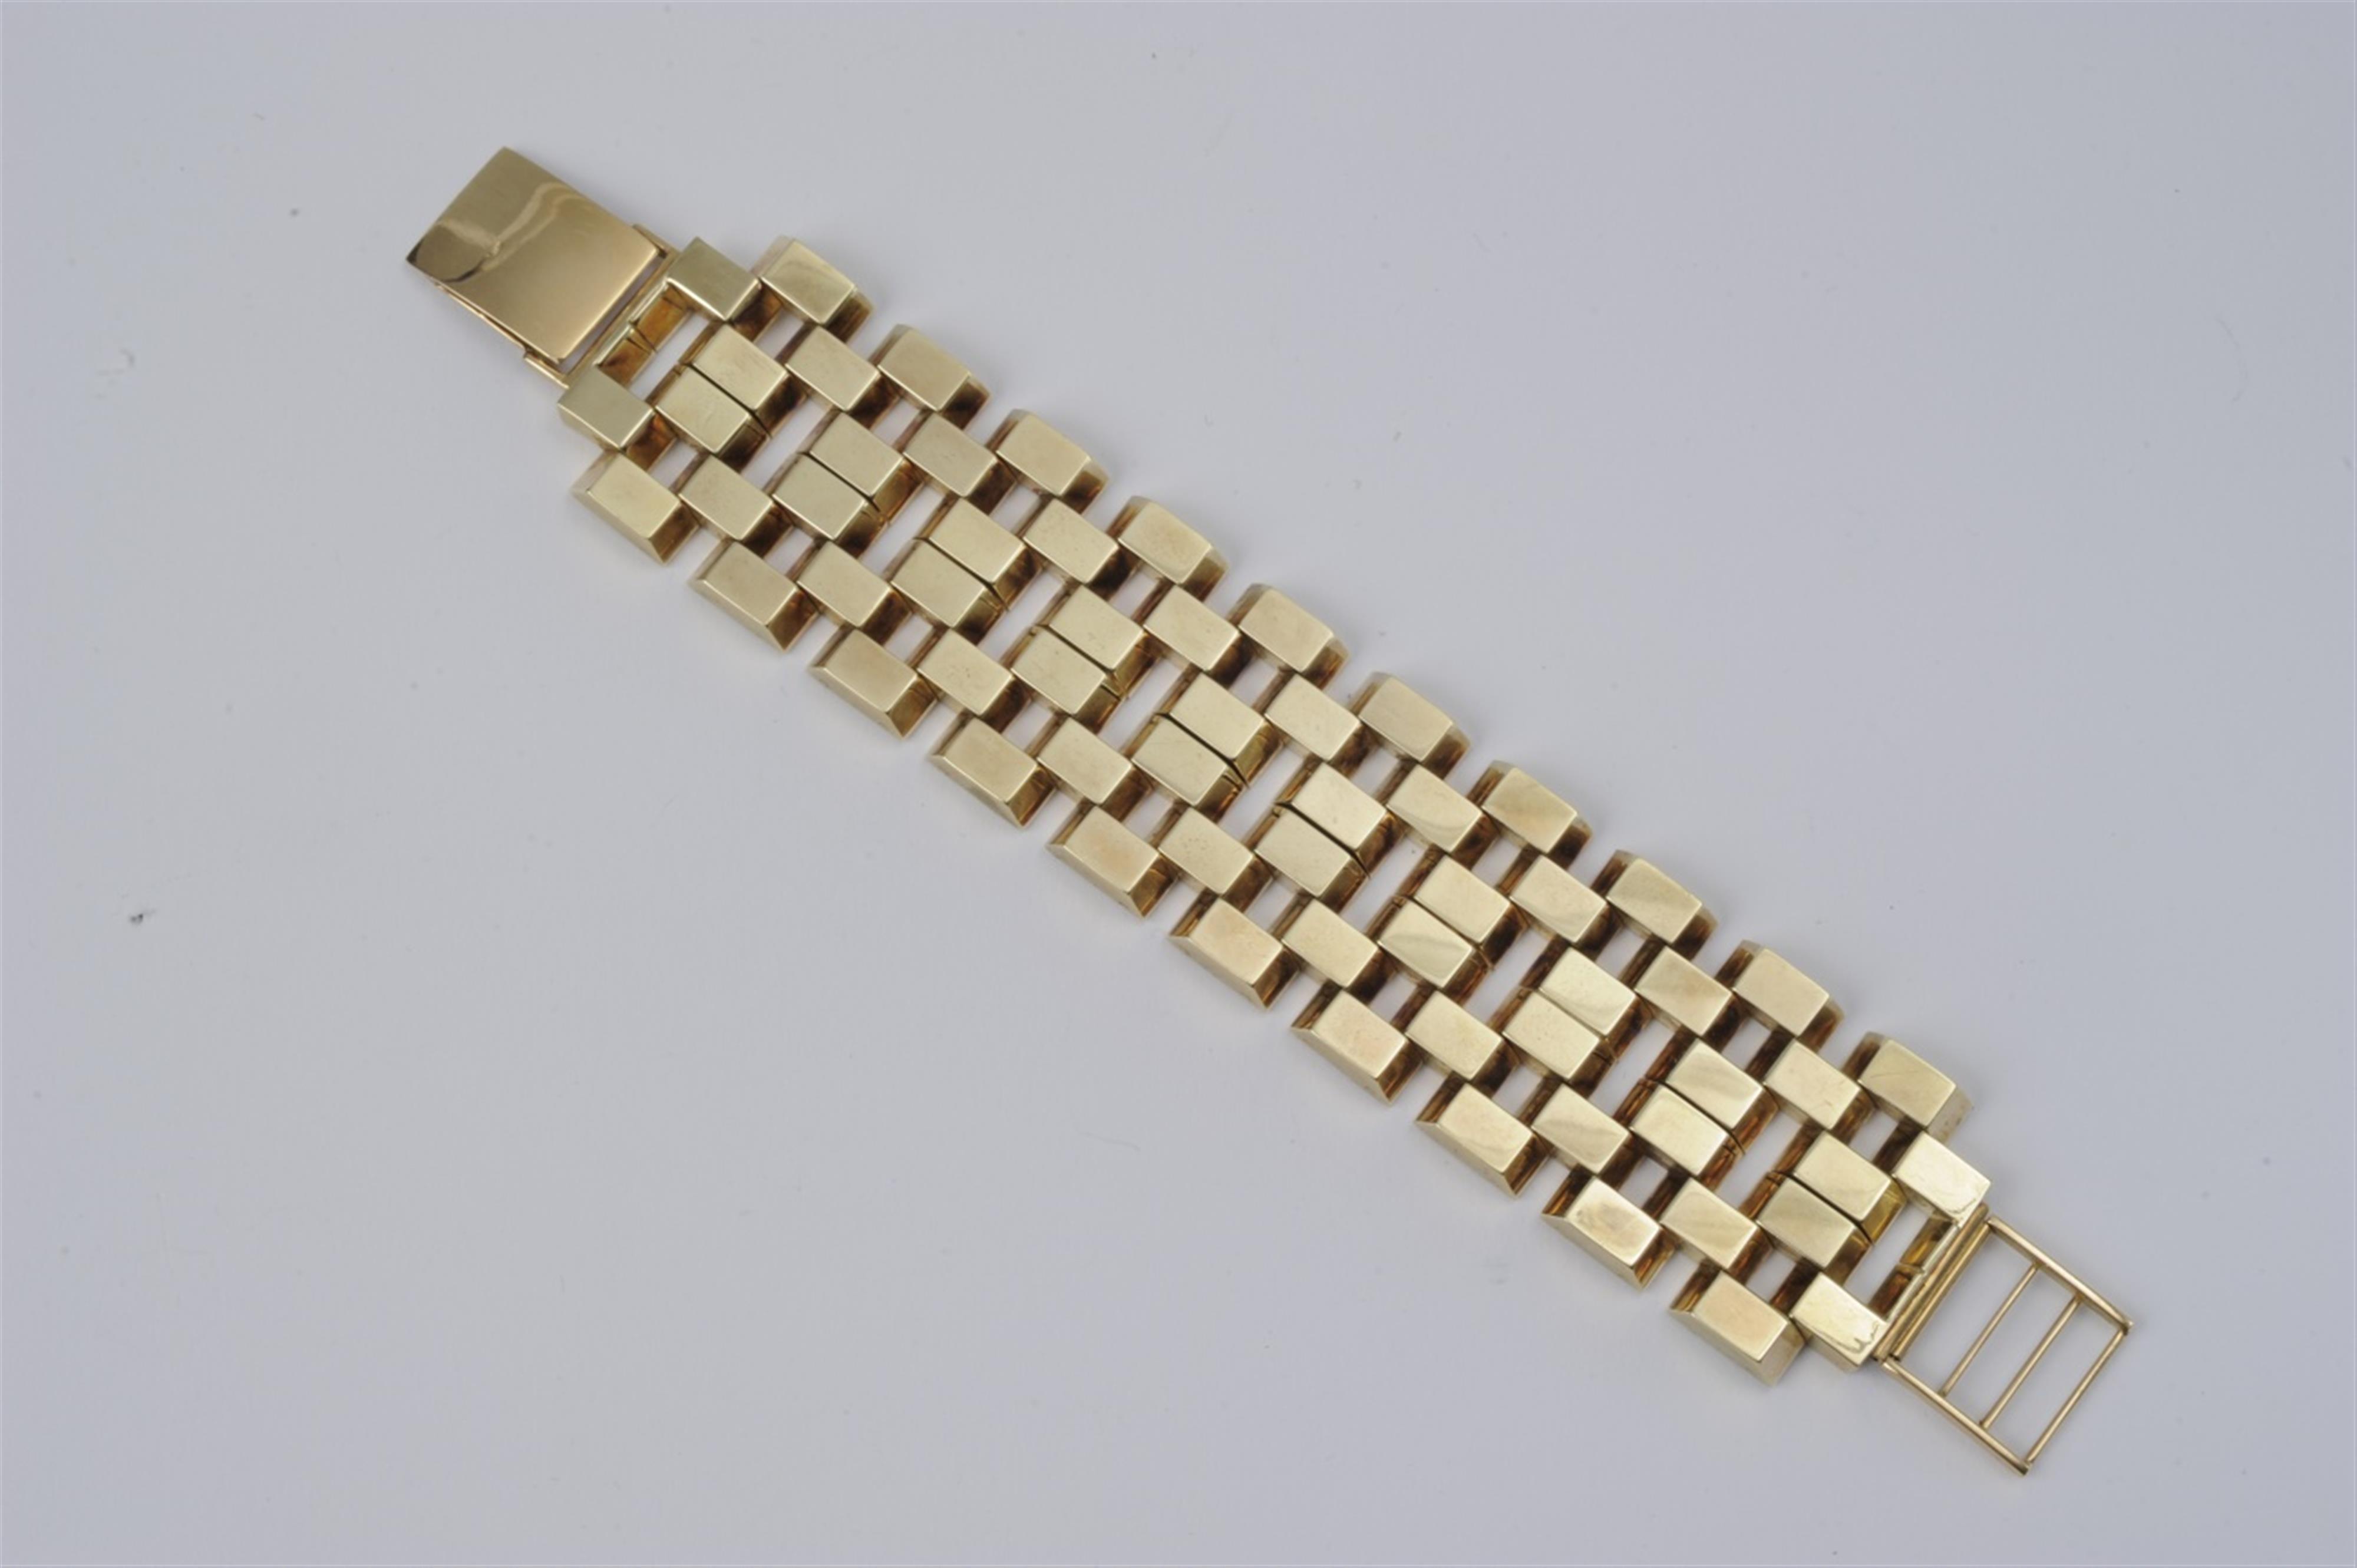 An Italian 18k gold bracelet - image-1